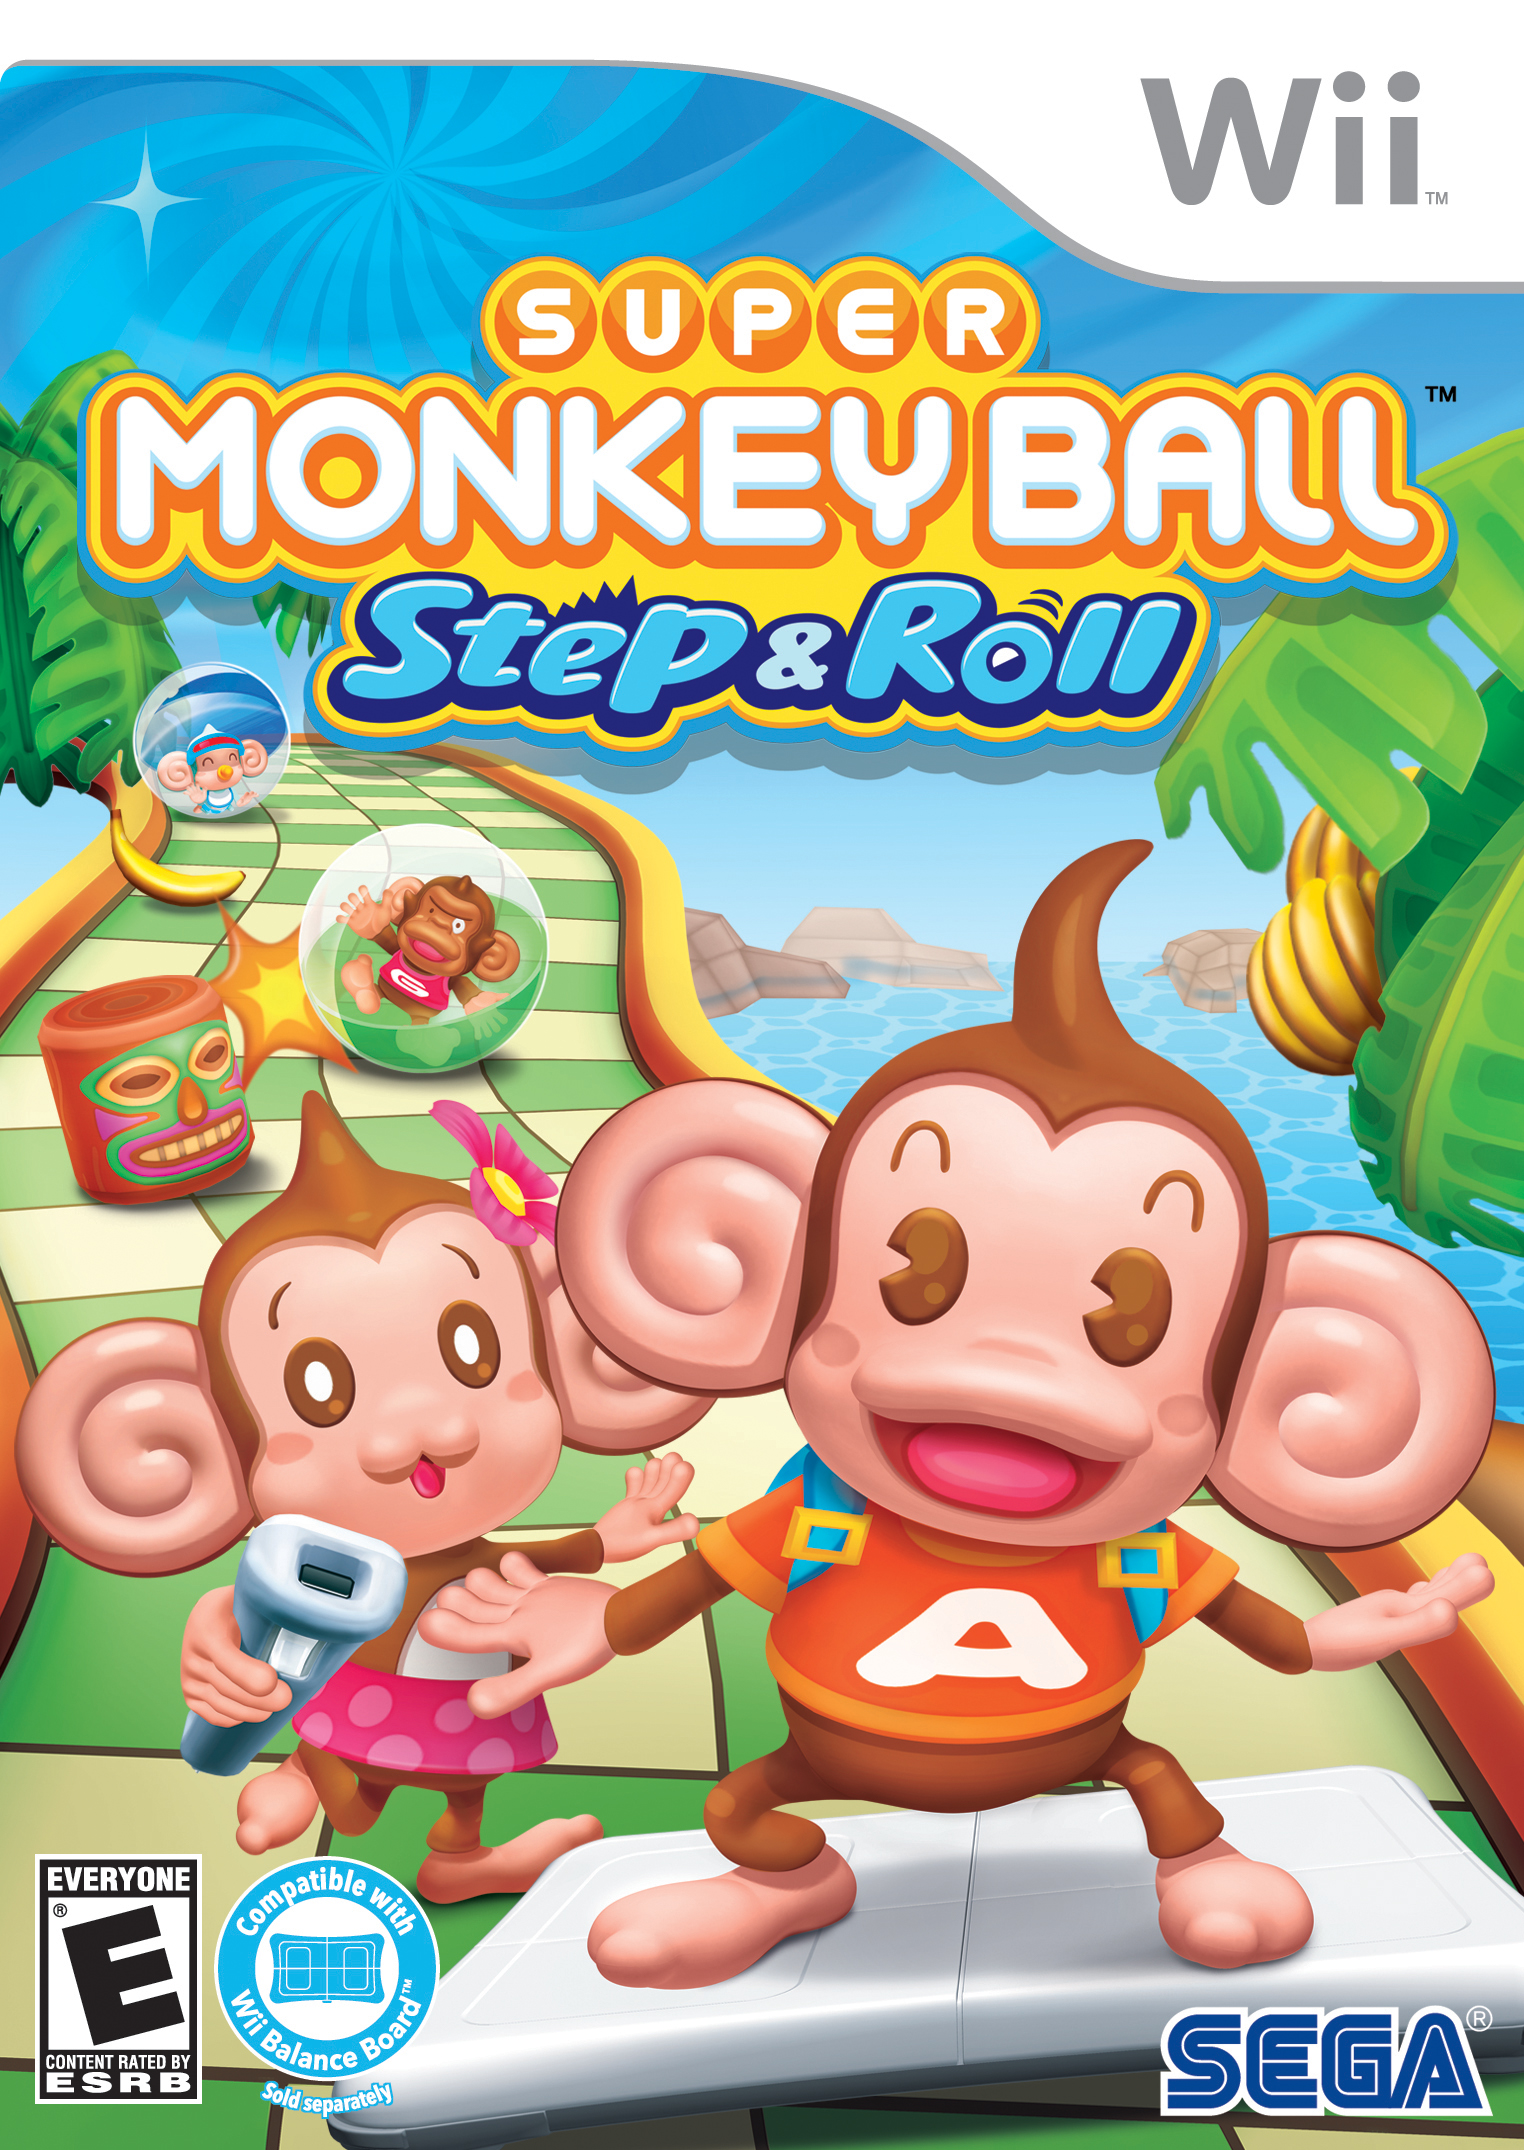 Monkey Ball Game Online